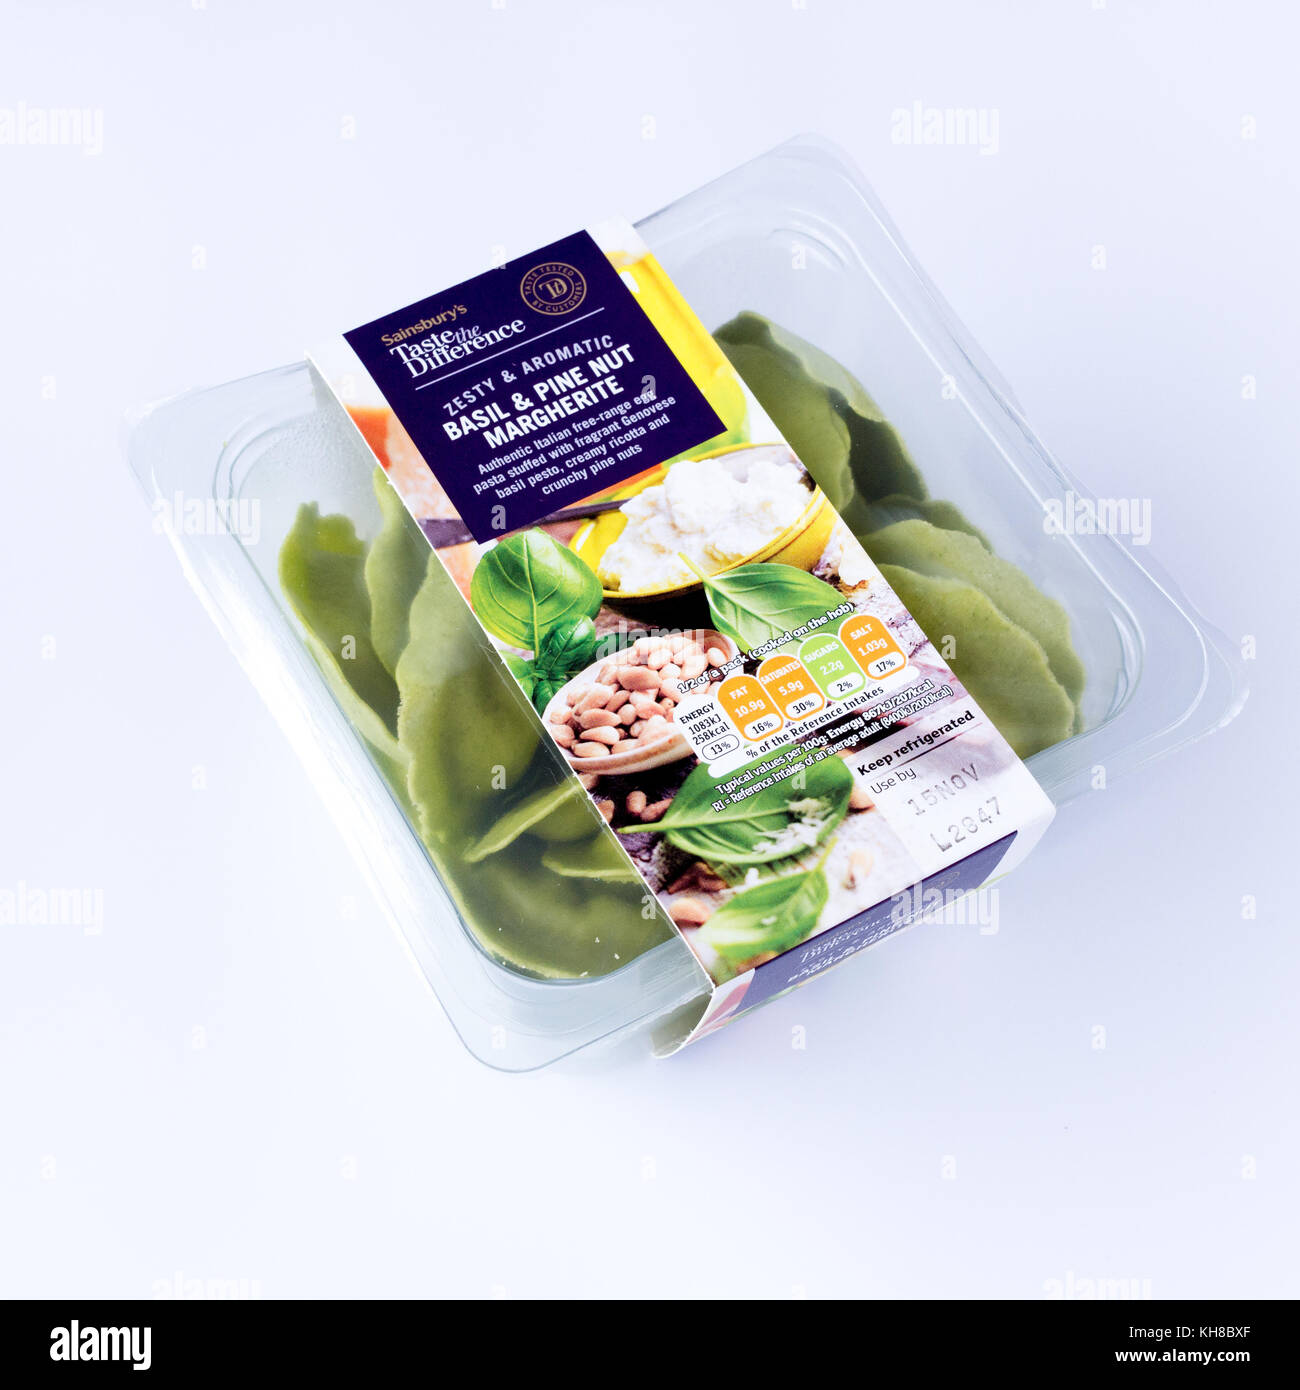 Sainsbury's Taste The Difference range of foods, basil & pine nut margherite, United Kingdom Stock Photo